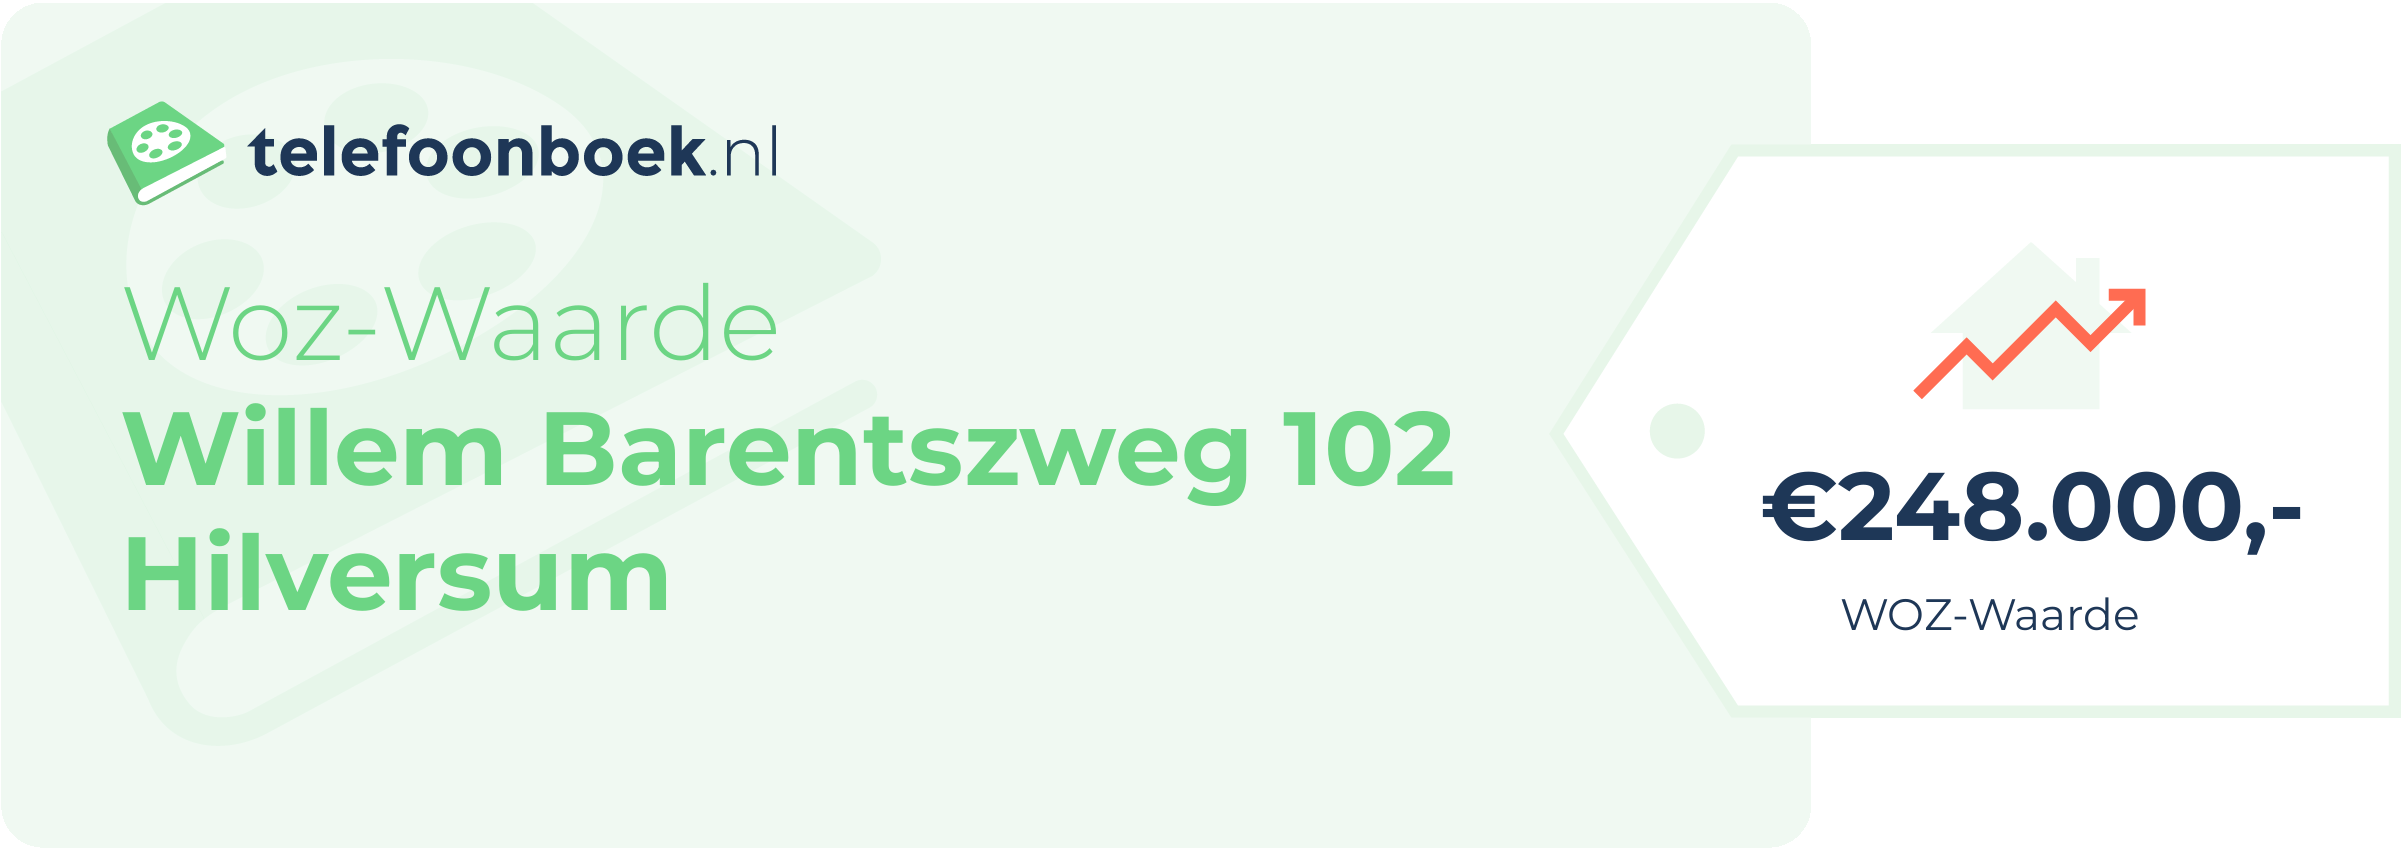 WOZ-waarde Willem Barentszweg 102 Hilversum